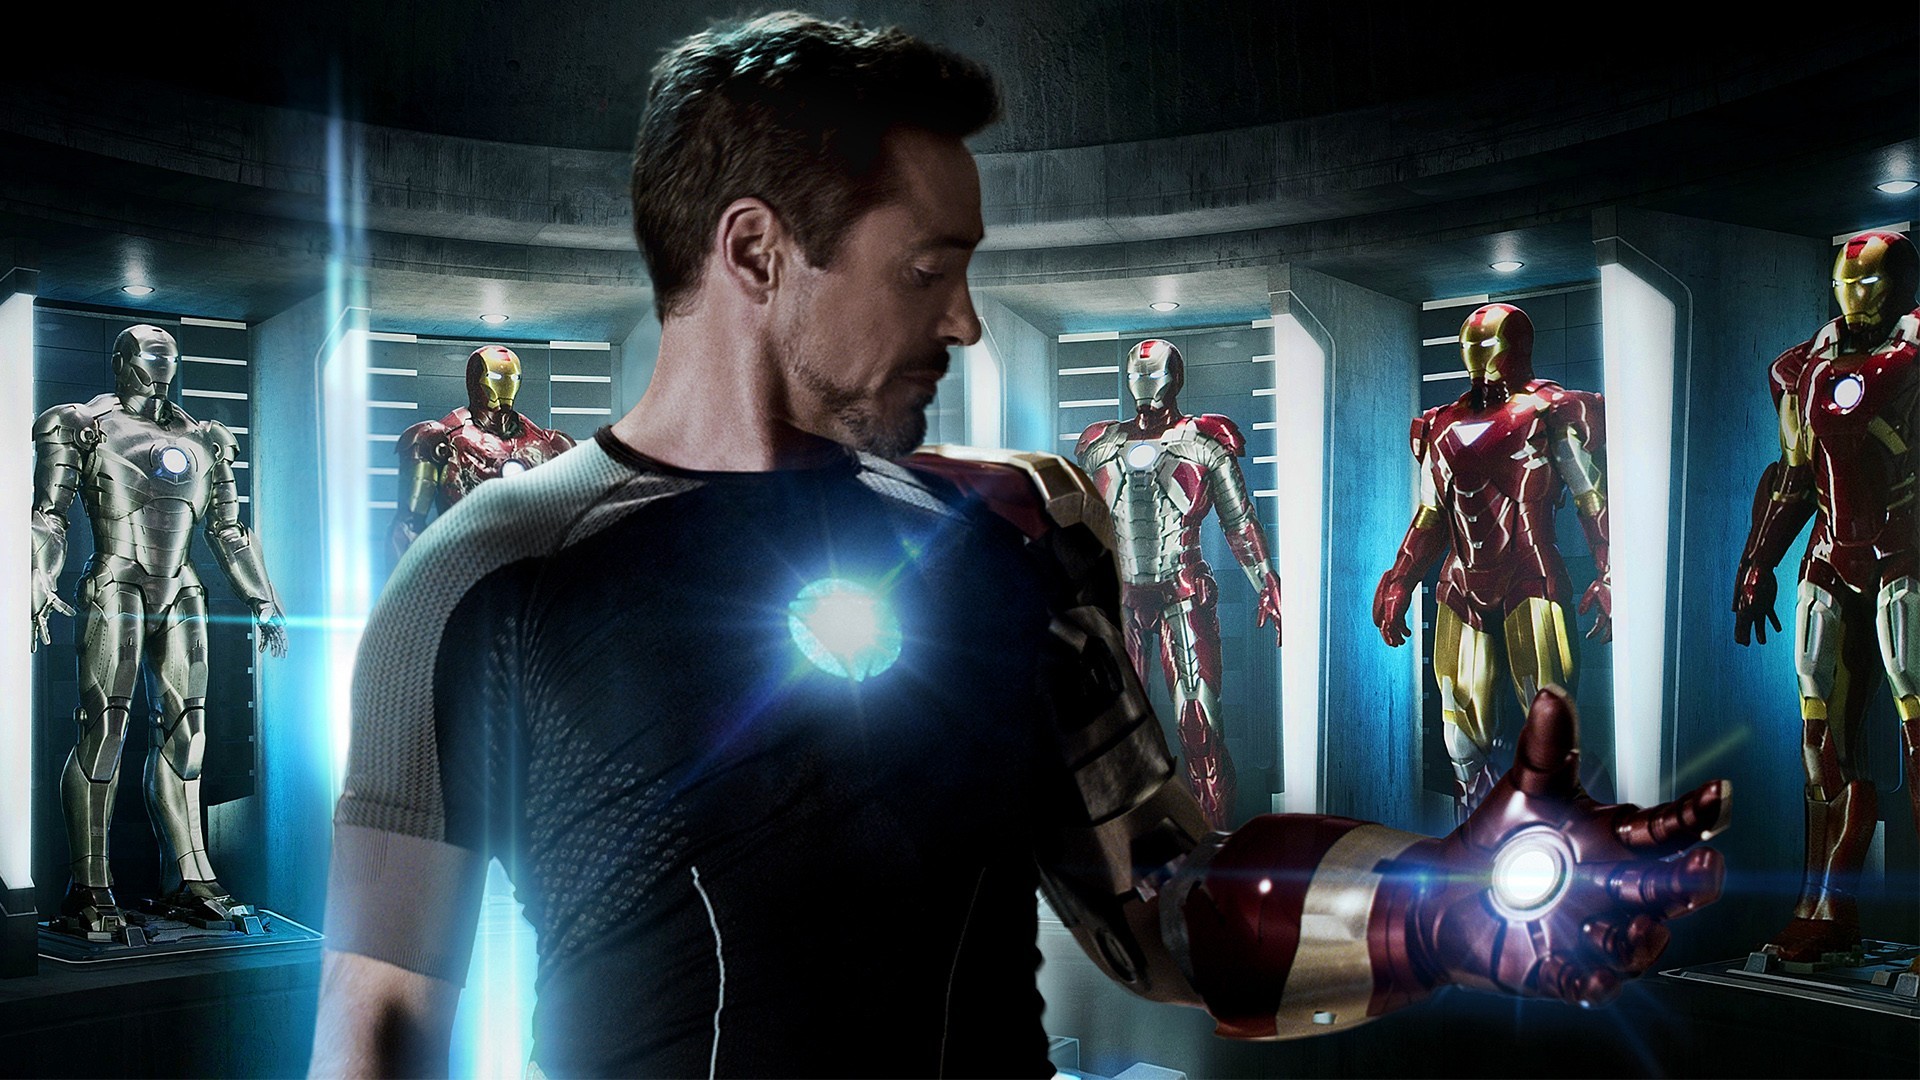 Tony Stark Iron Man Iron Man 3 Glowing Robert Downey Jr Wallpapers Hd Desktop And Mobile Backgrounds